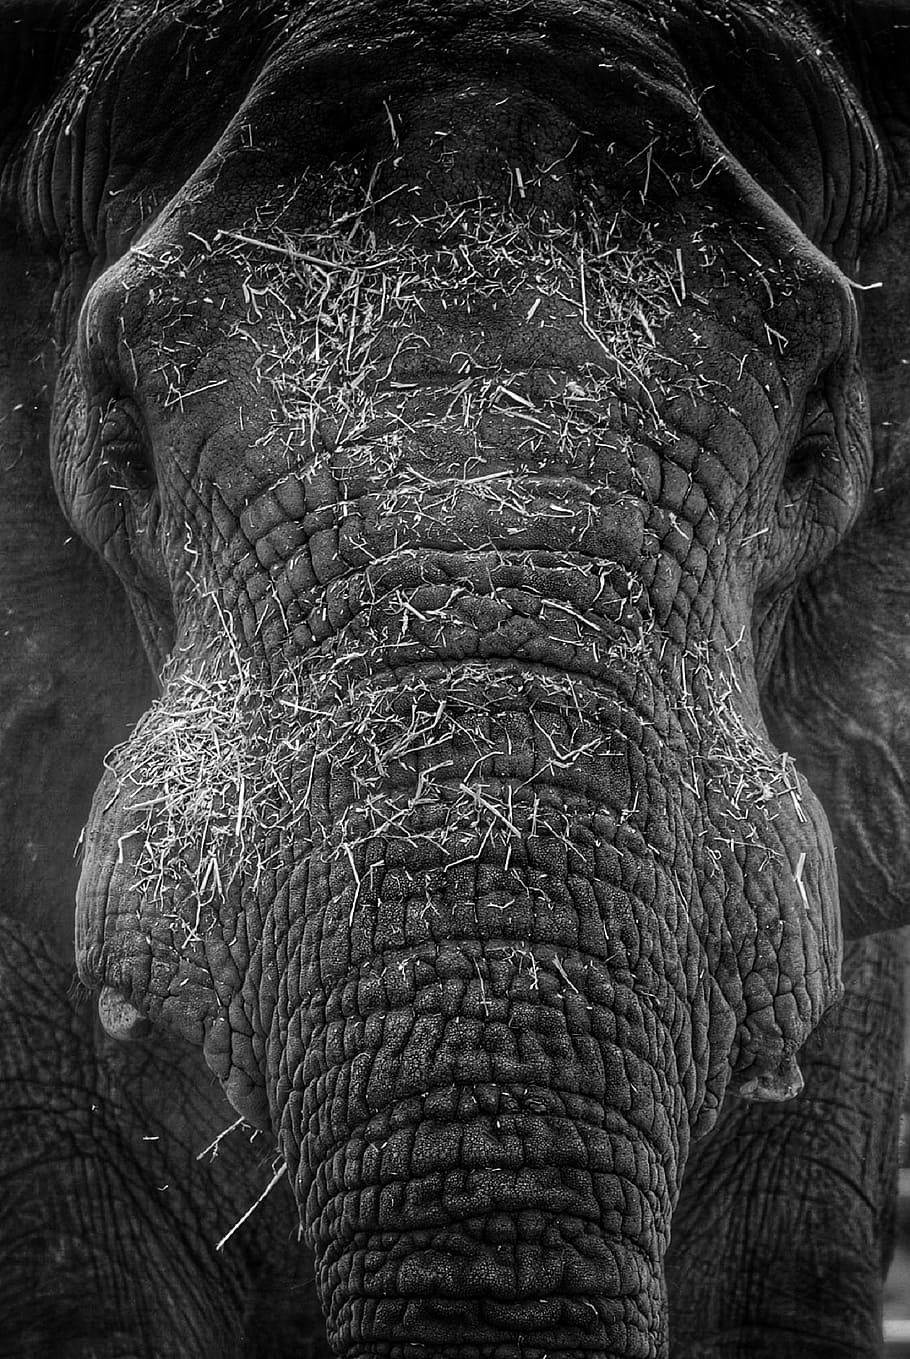 gajah, kepala, hitam dan putih, potret, keriput, batang, mata, wajah, kebun binatang, close up